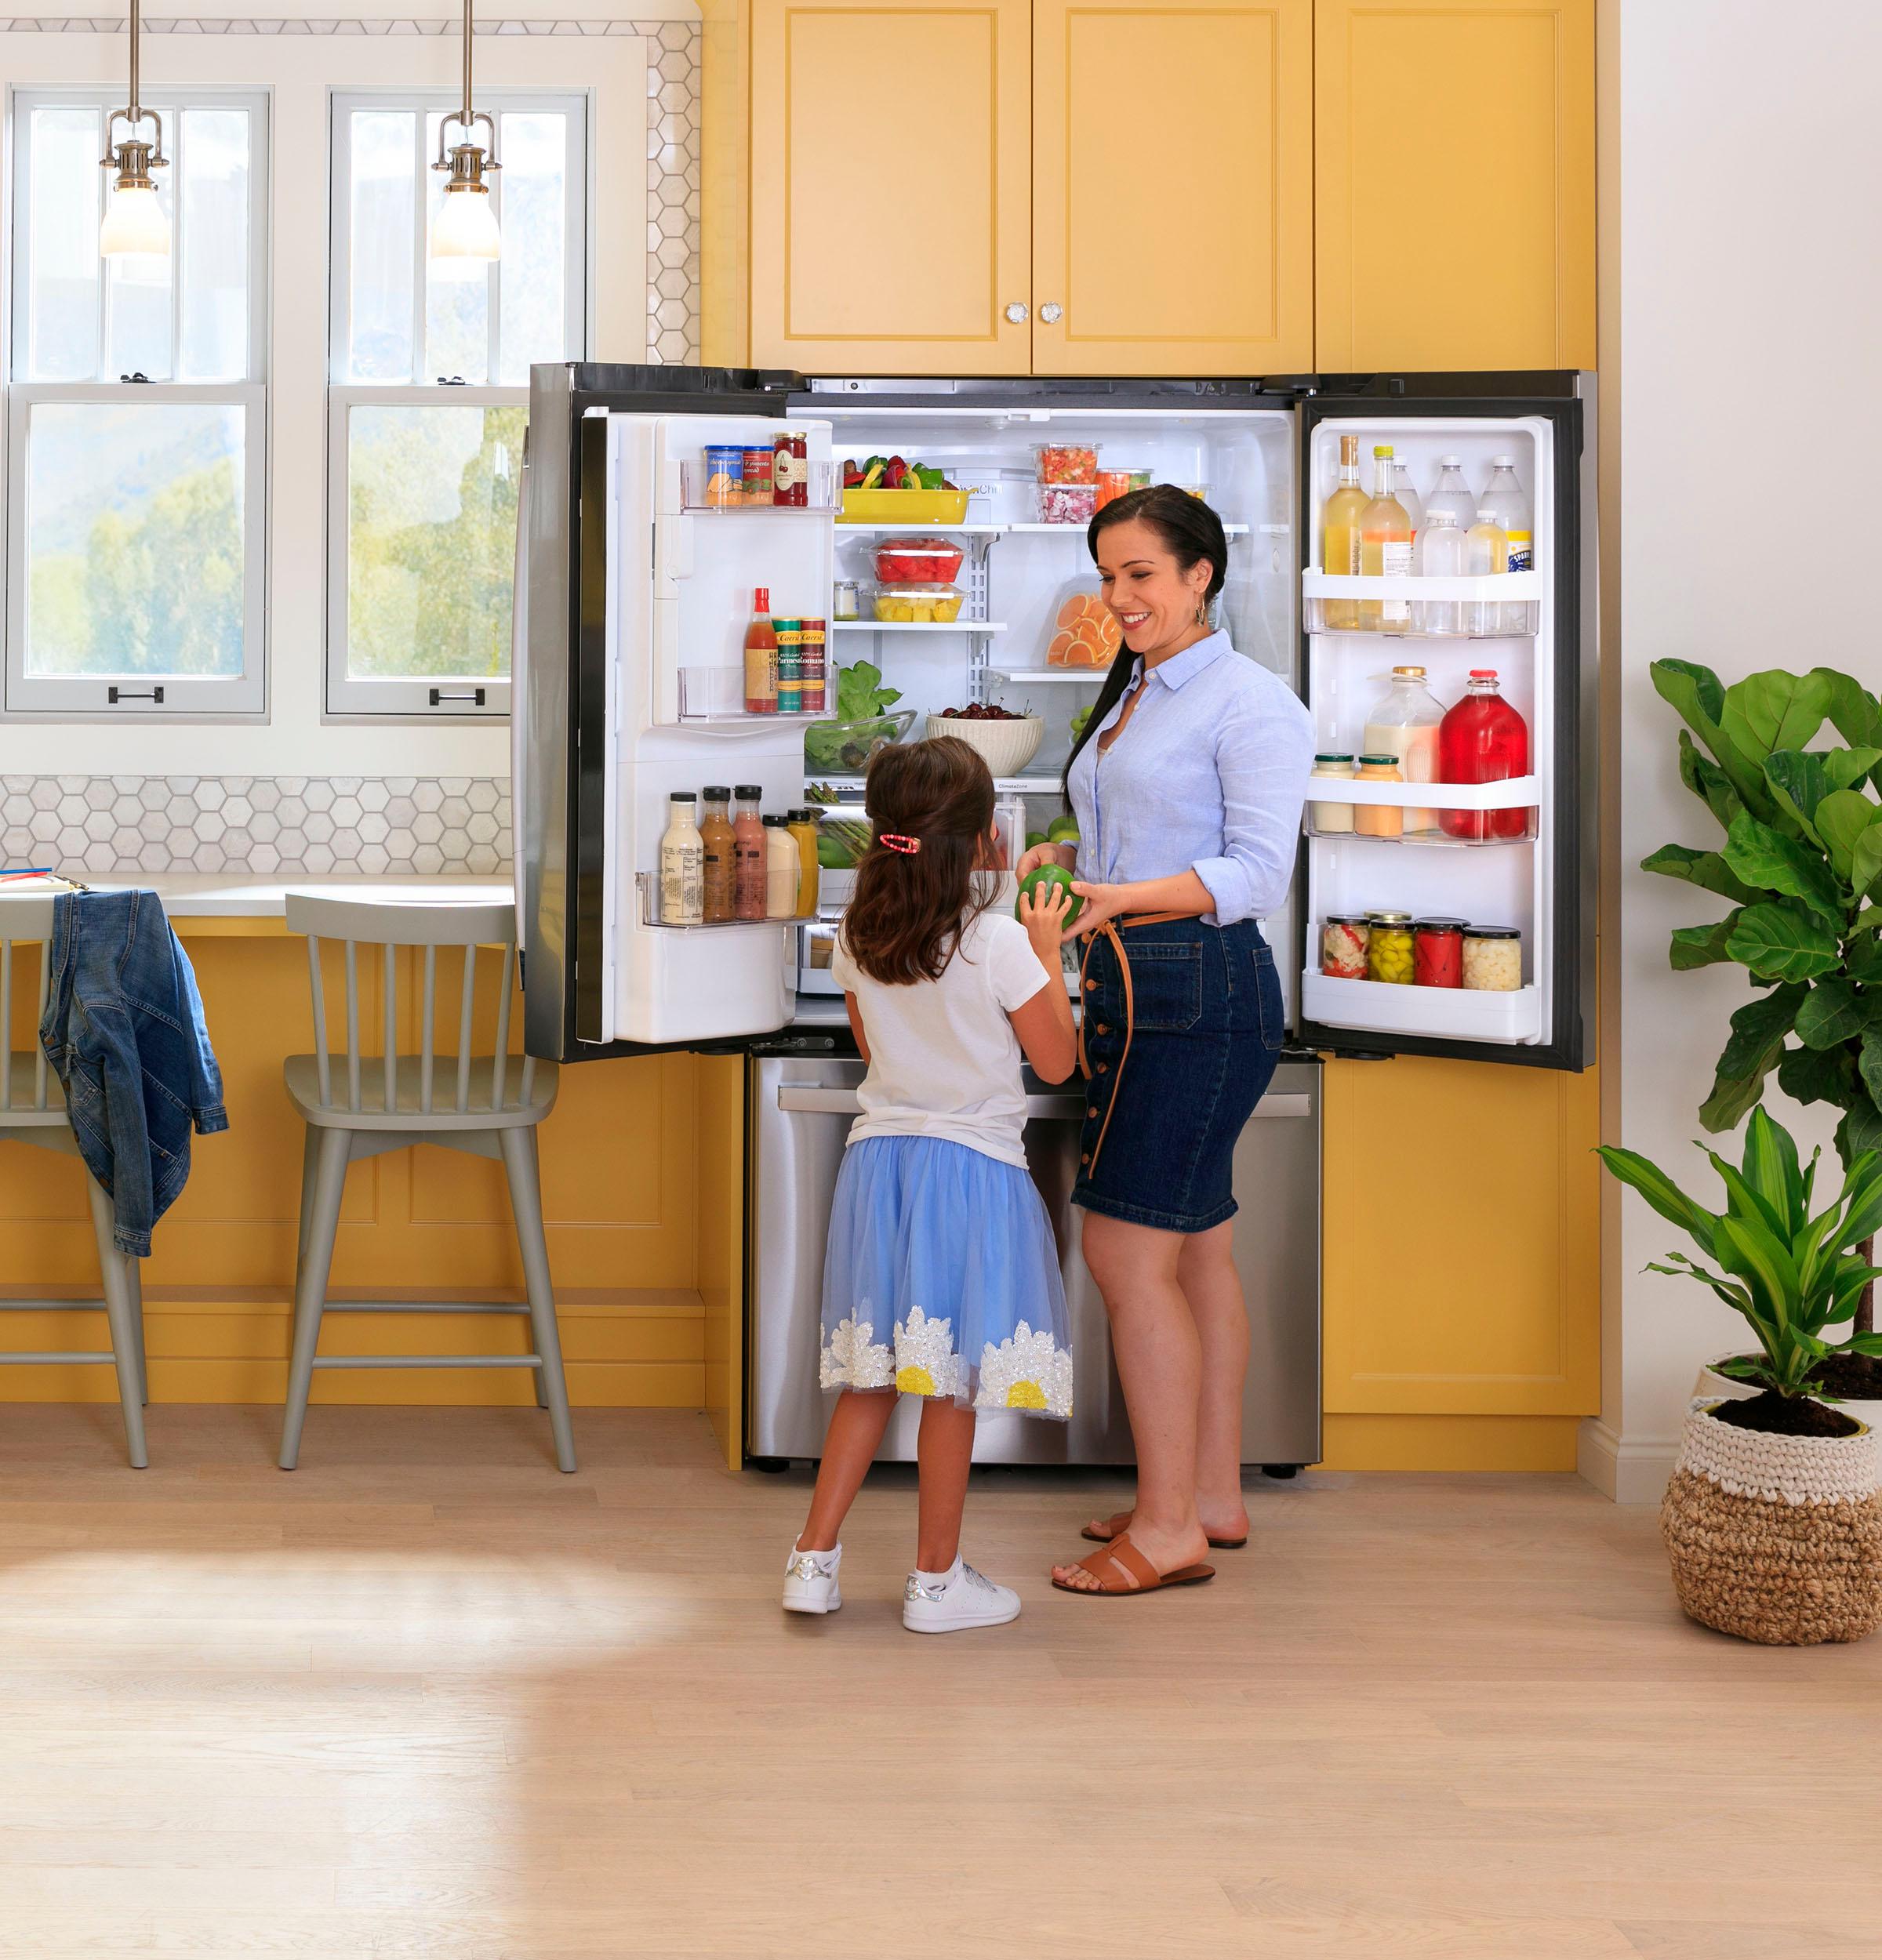 GE® ENERGY STAR® 22.1 Cu. Ft. Counter-Depth Fingerprint Resistant French-Door Refrigerator